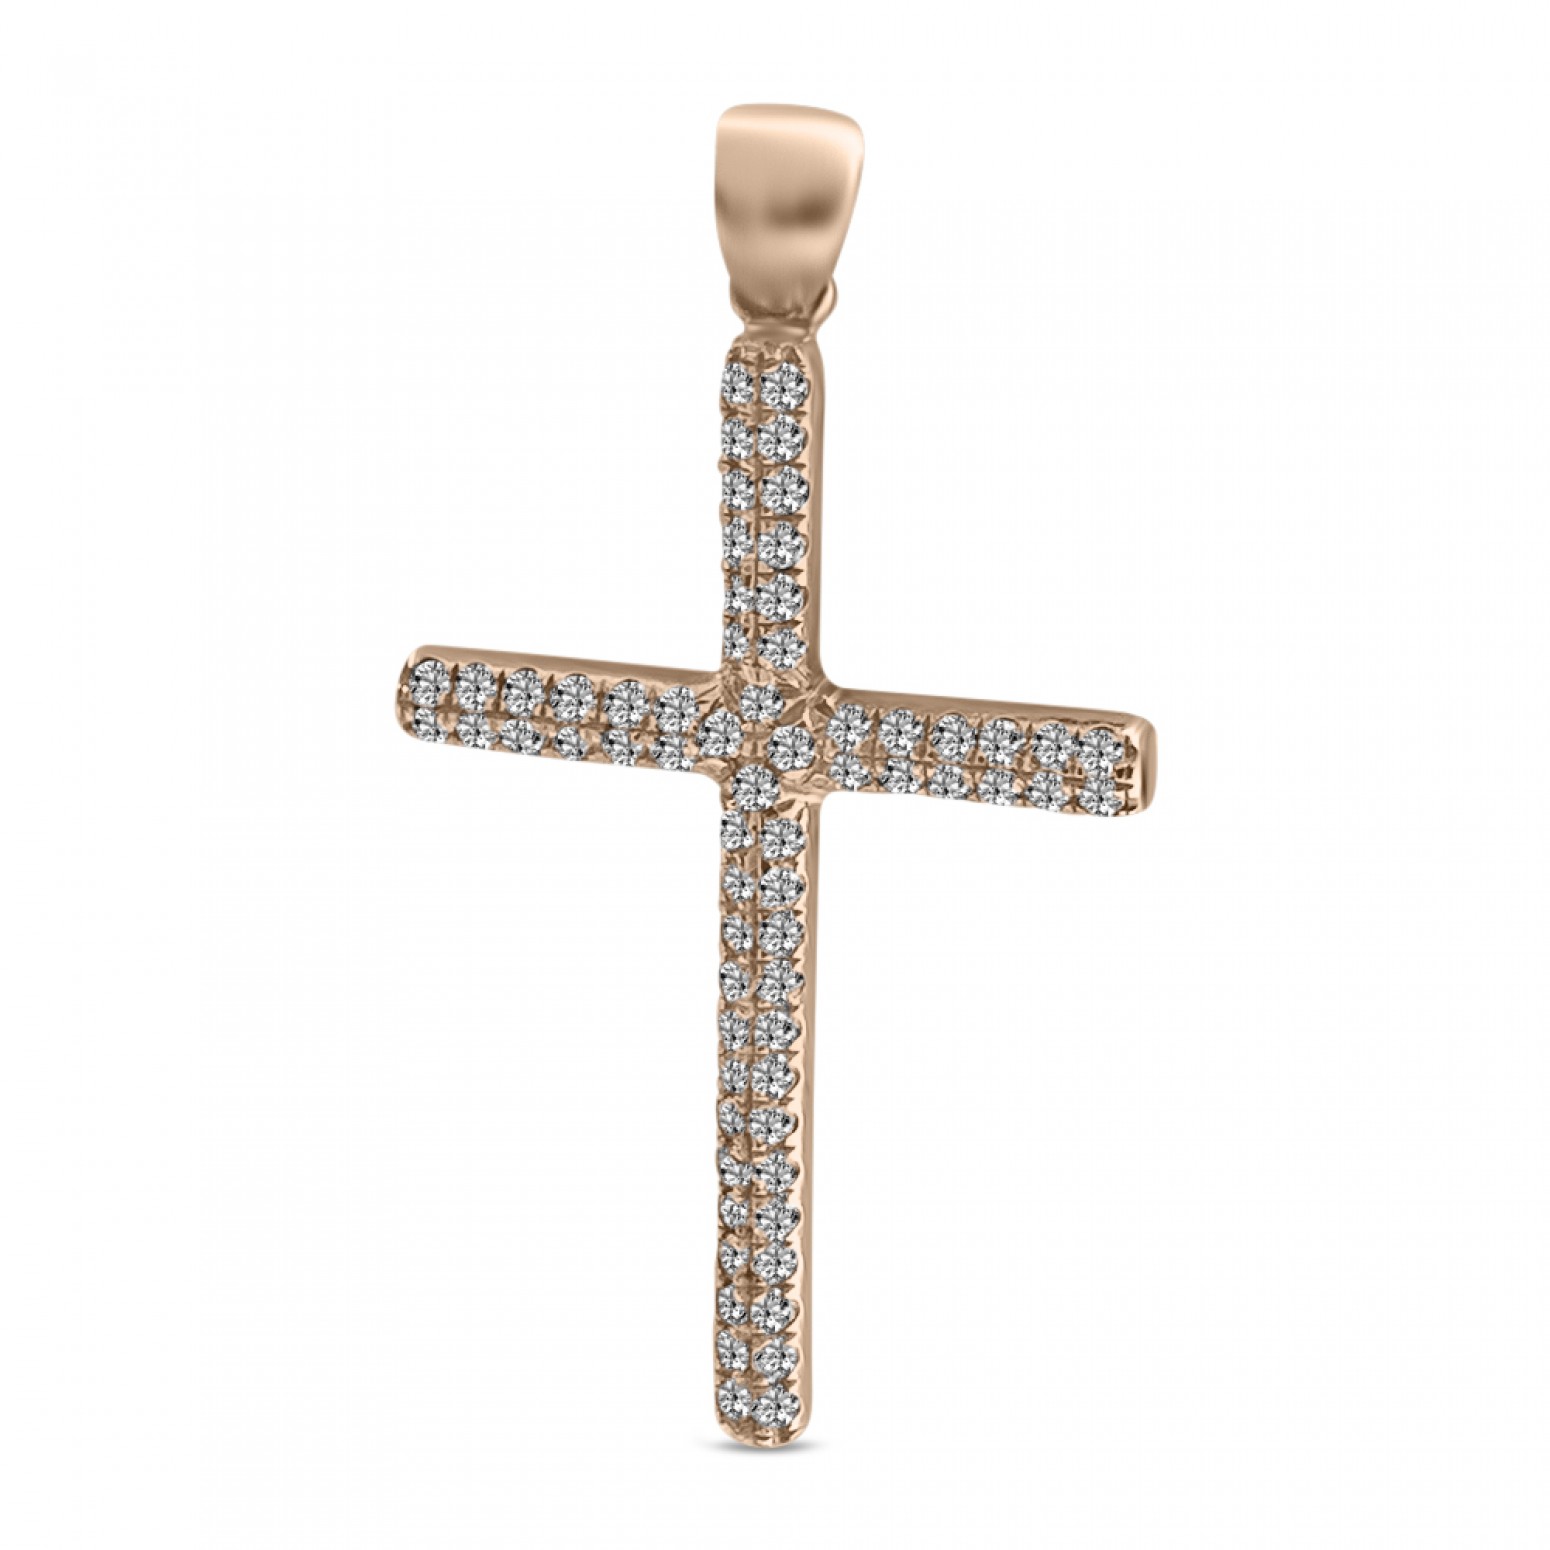 Baptism cross K18 pink gold with diamonds 0.28ct, VS2, H st3703 CROSSES Κοσμηματα - chrilia.gr